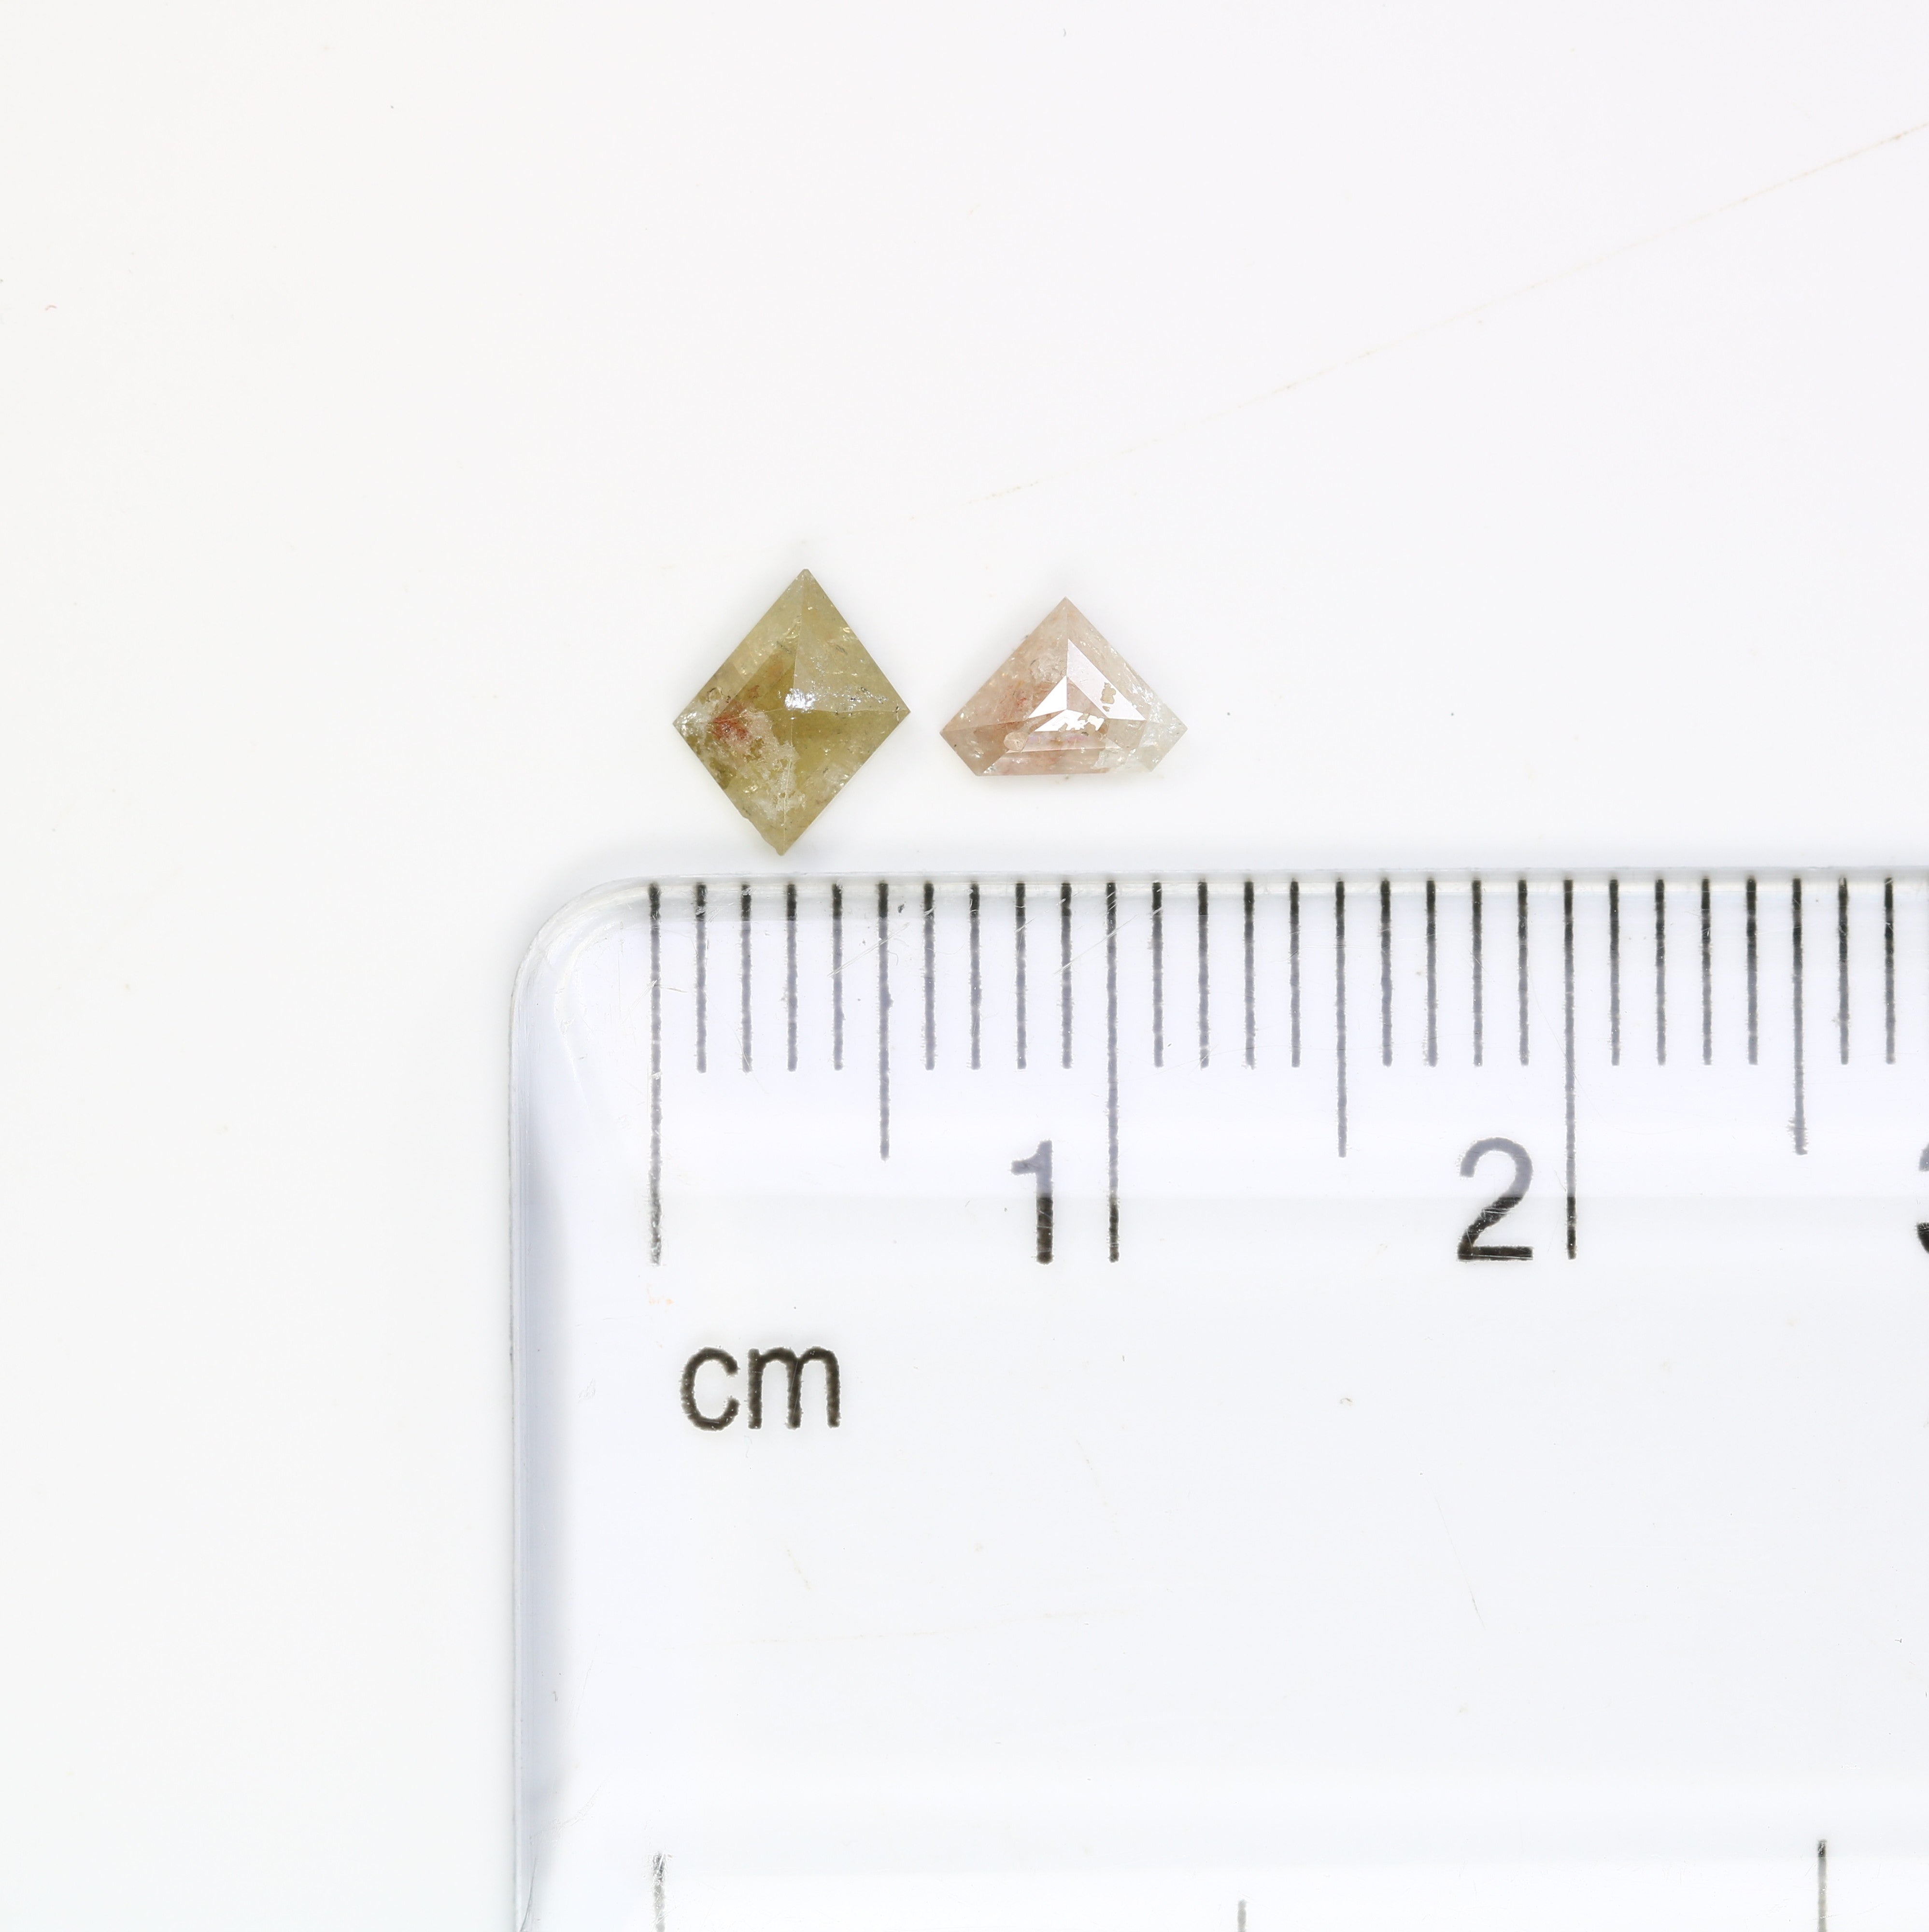 0.67 CT Natural Loose Fancy Mix Shape Unique Multi Diamond For Designer Jewelry